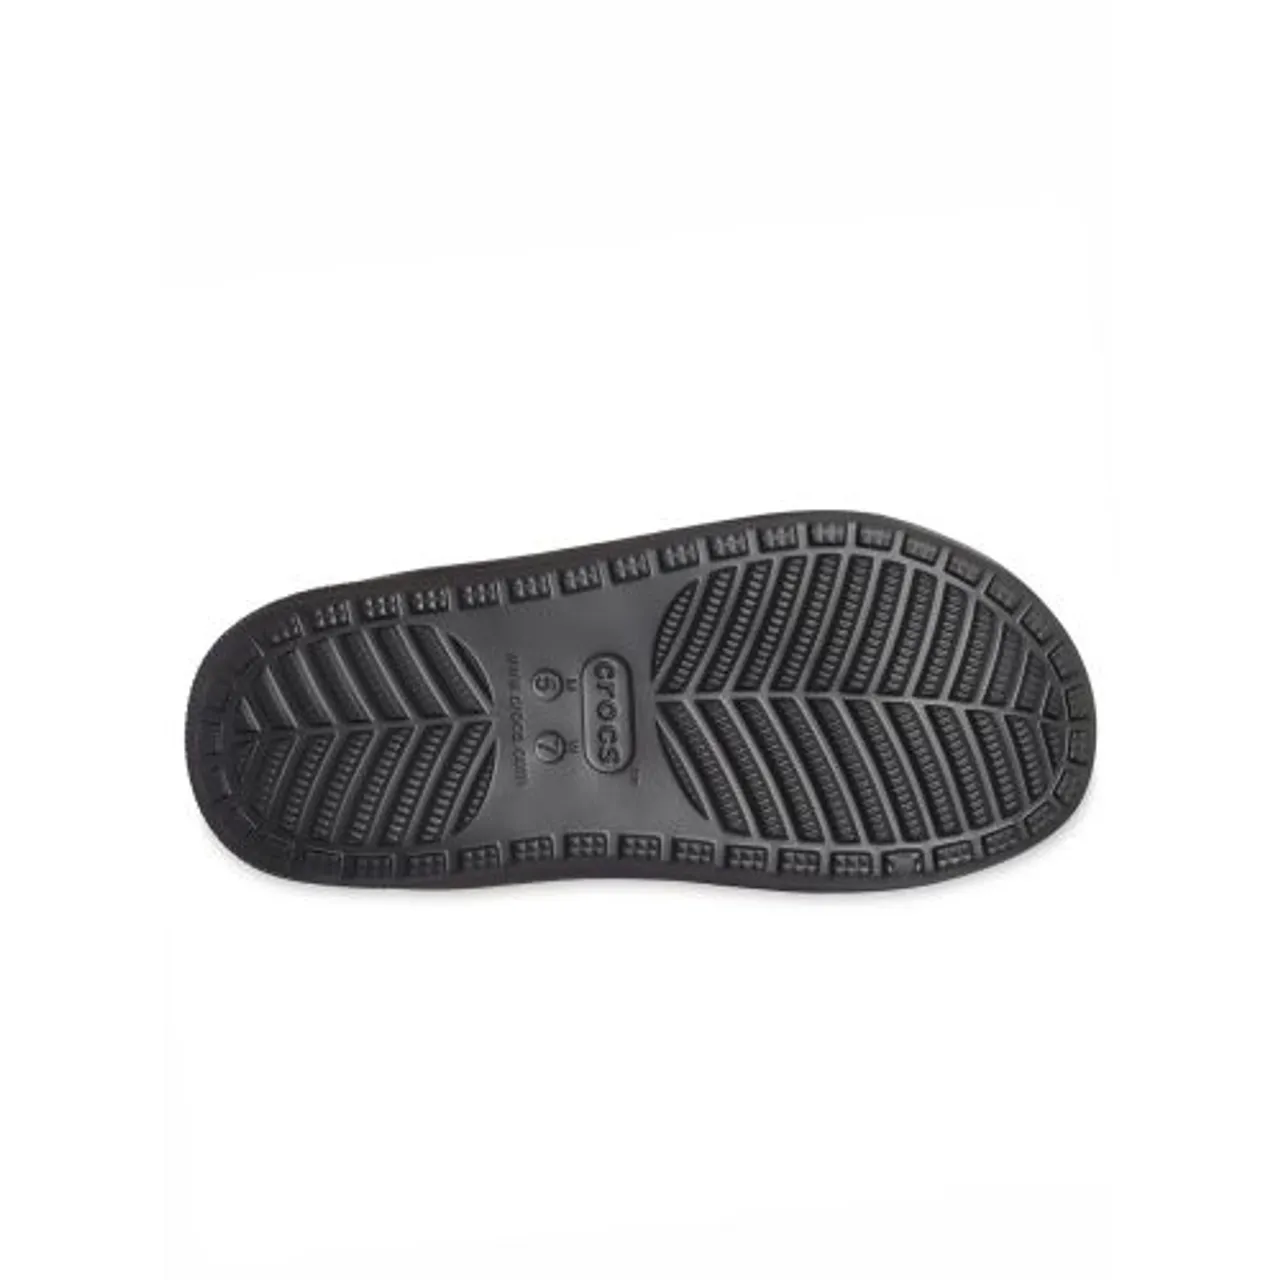 Crocs Mens Black Classic Cozzzy Sandal